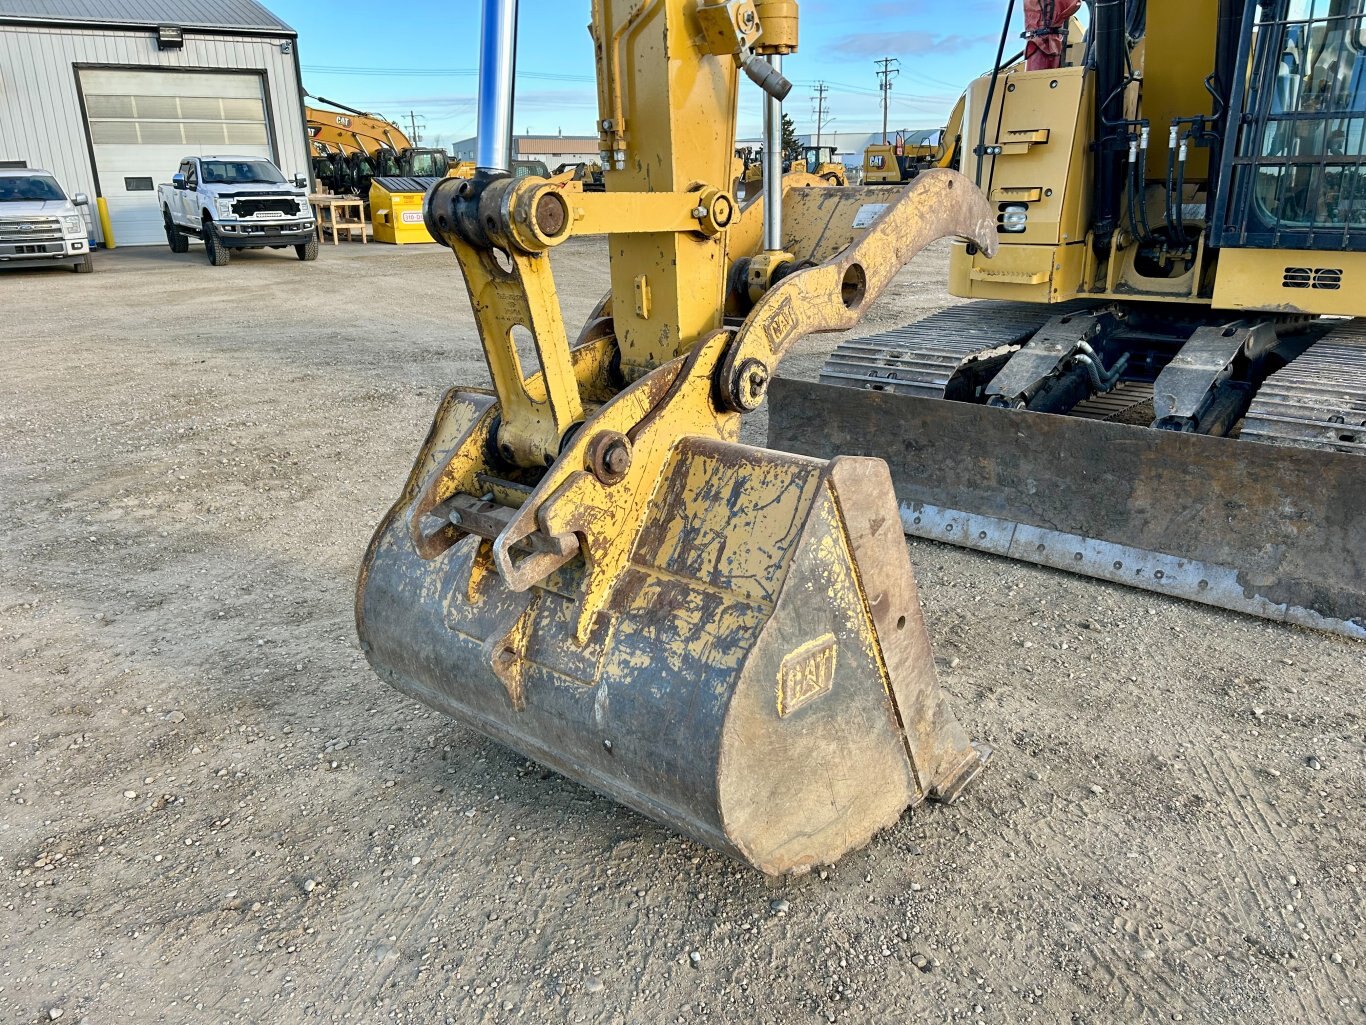 2018 Caterpillar 315F Excavator w/ Thumb